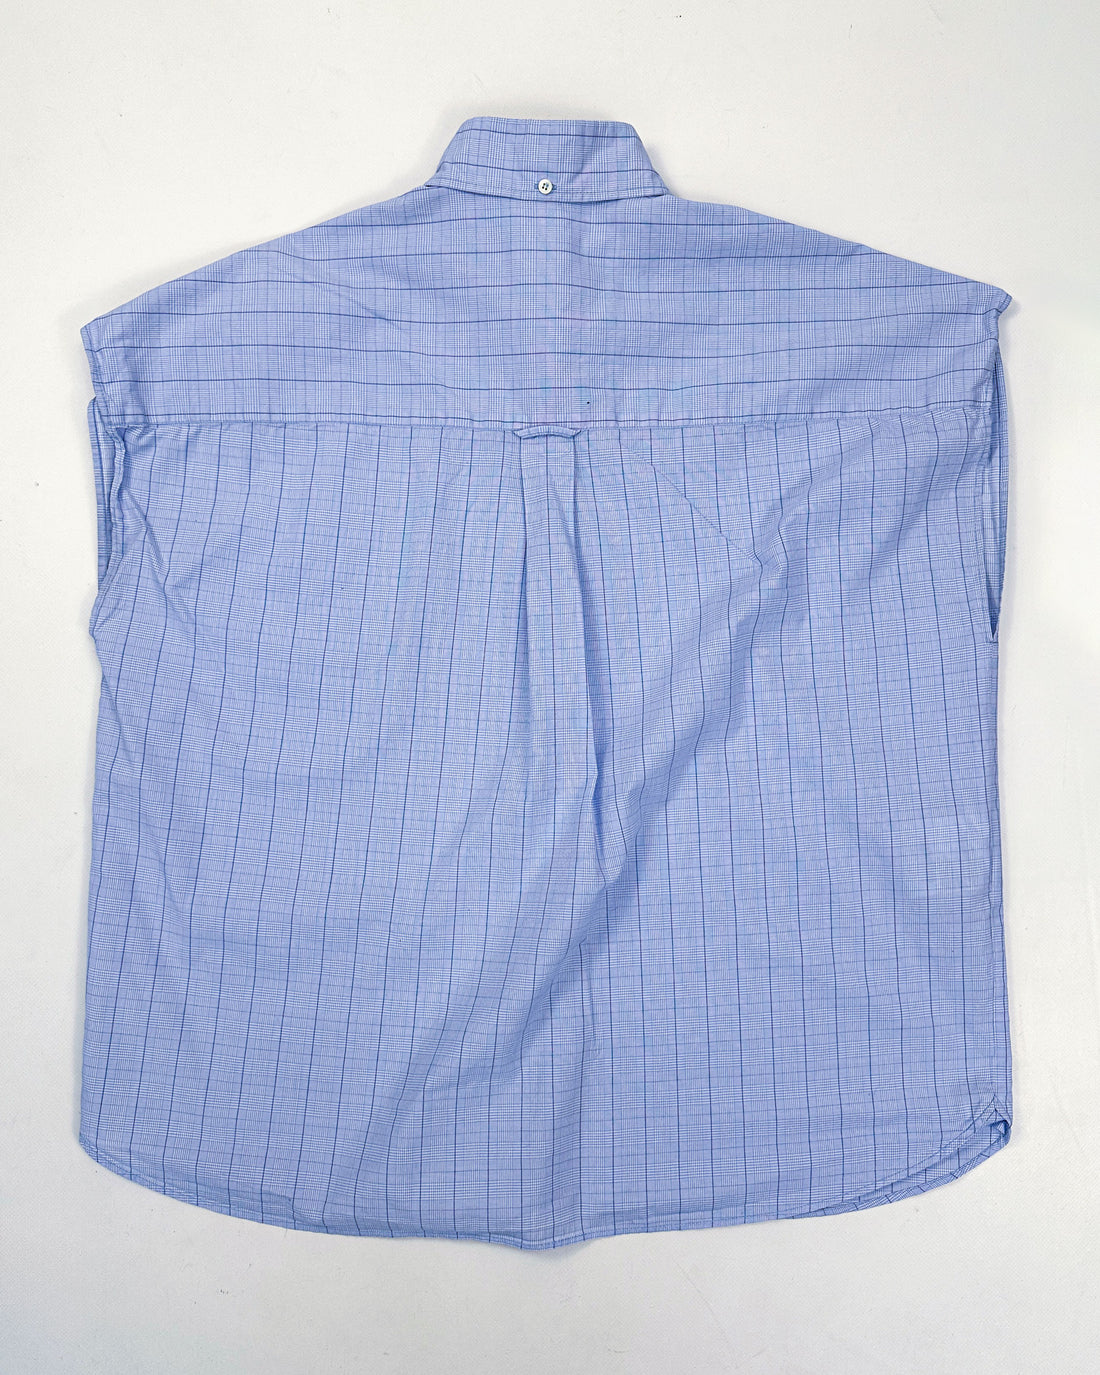 Miu Miu Sleeveless Squared Blue Shirt 2000's